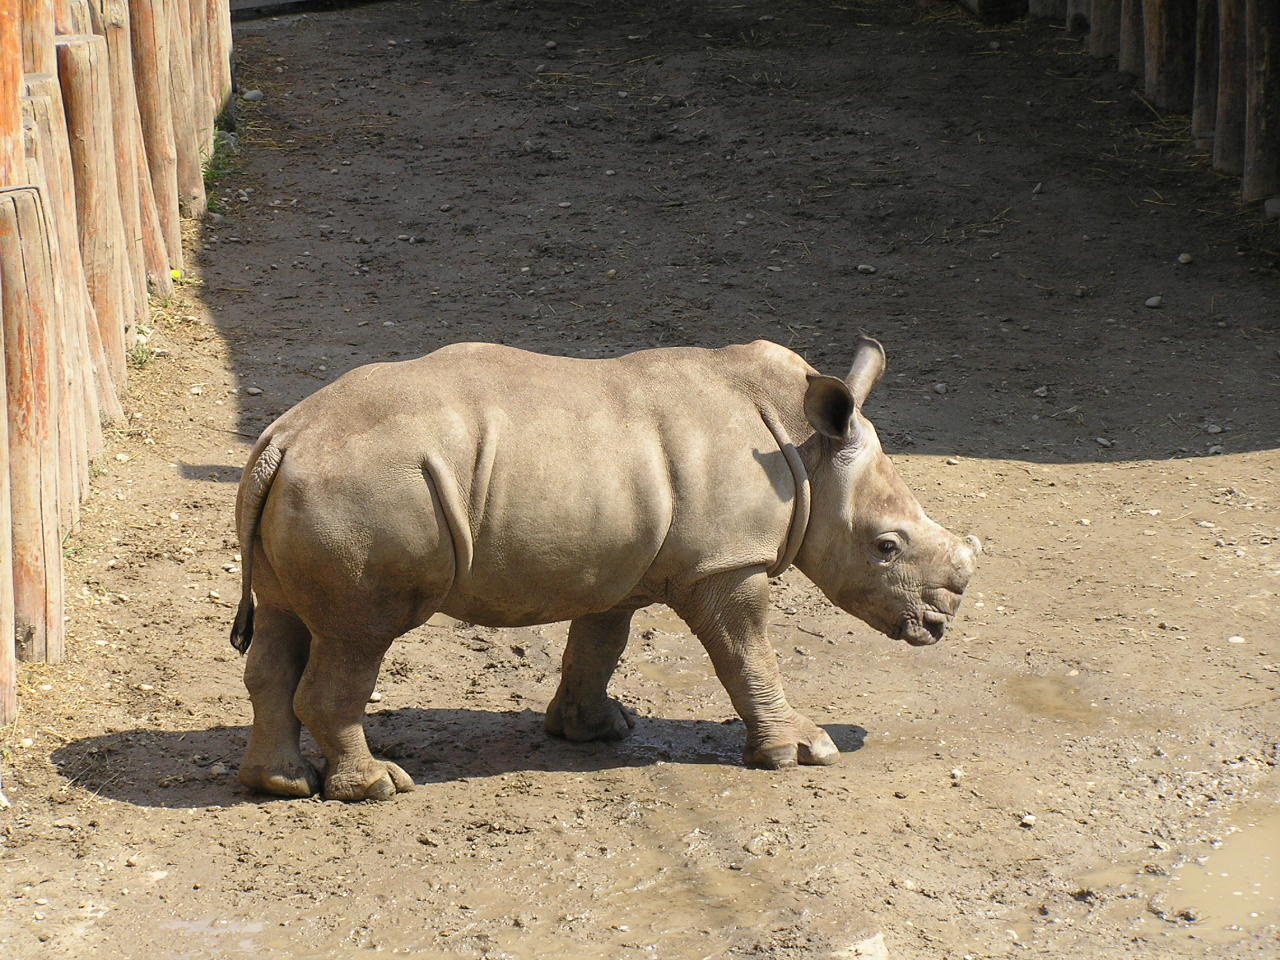 063 Kis rinocérosz Layla